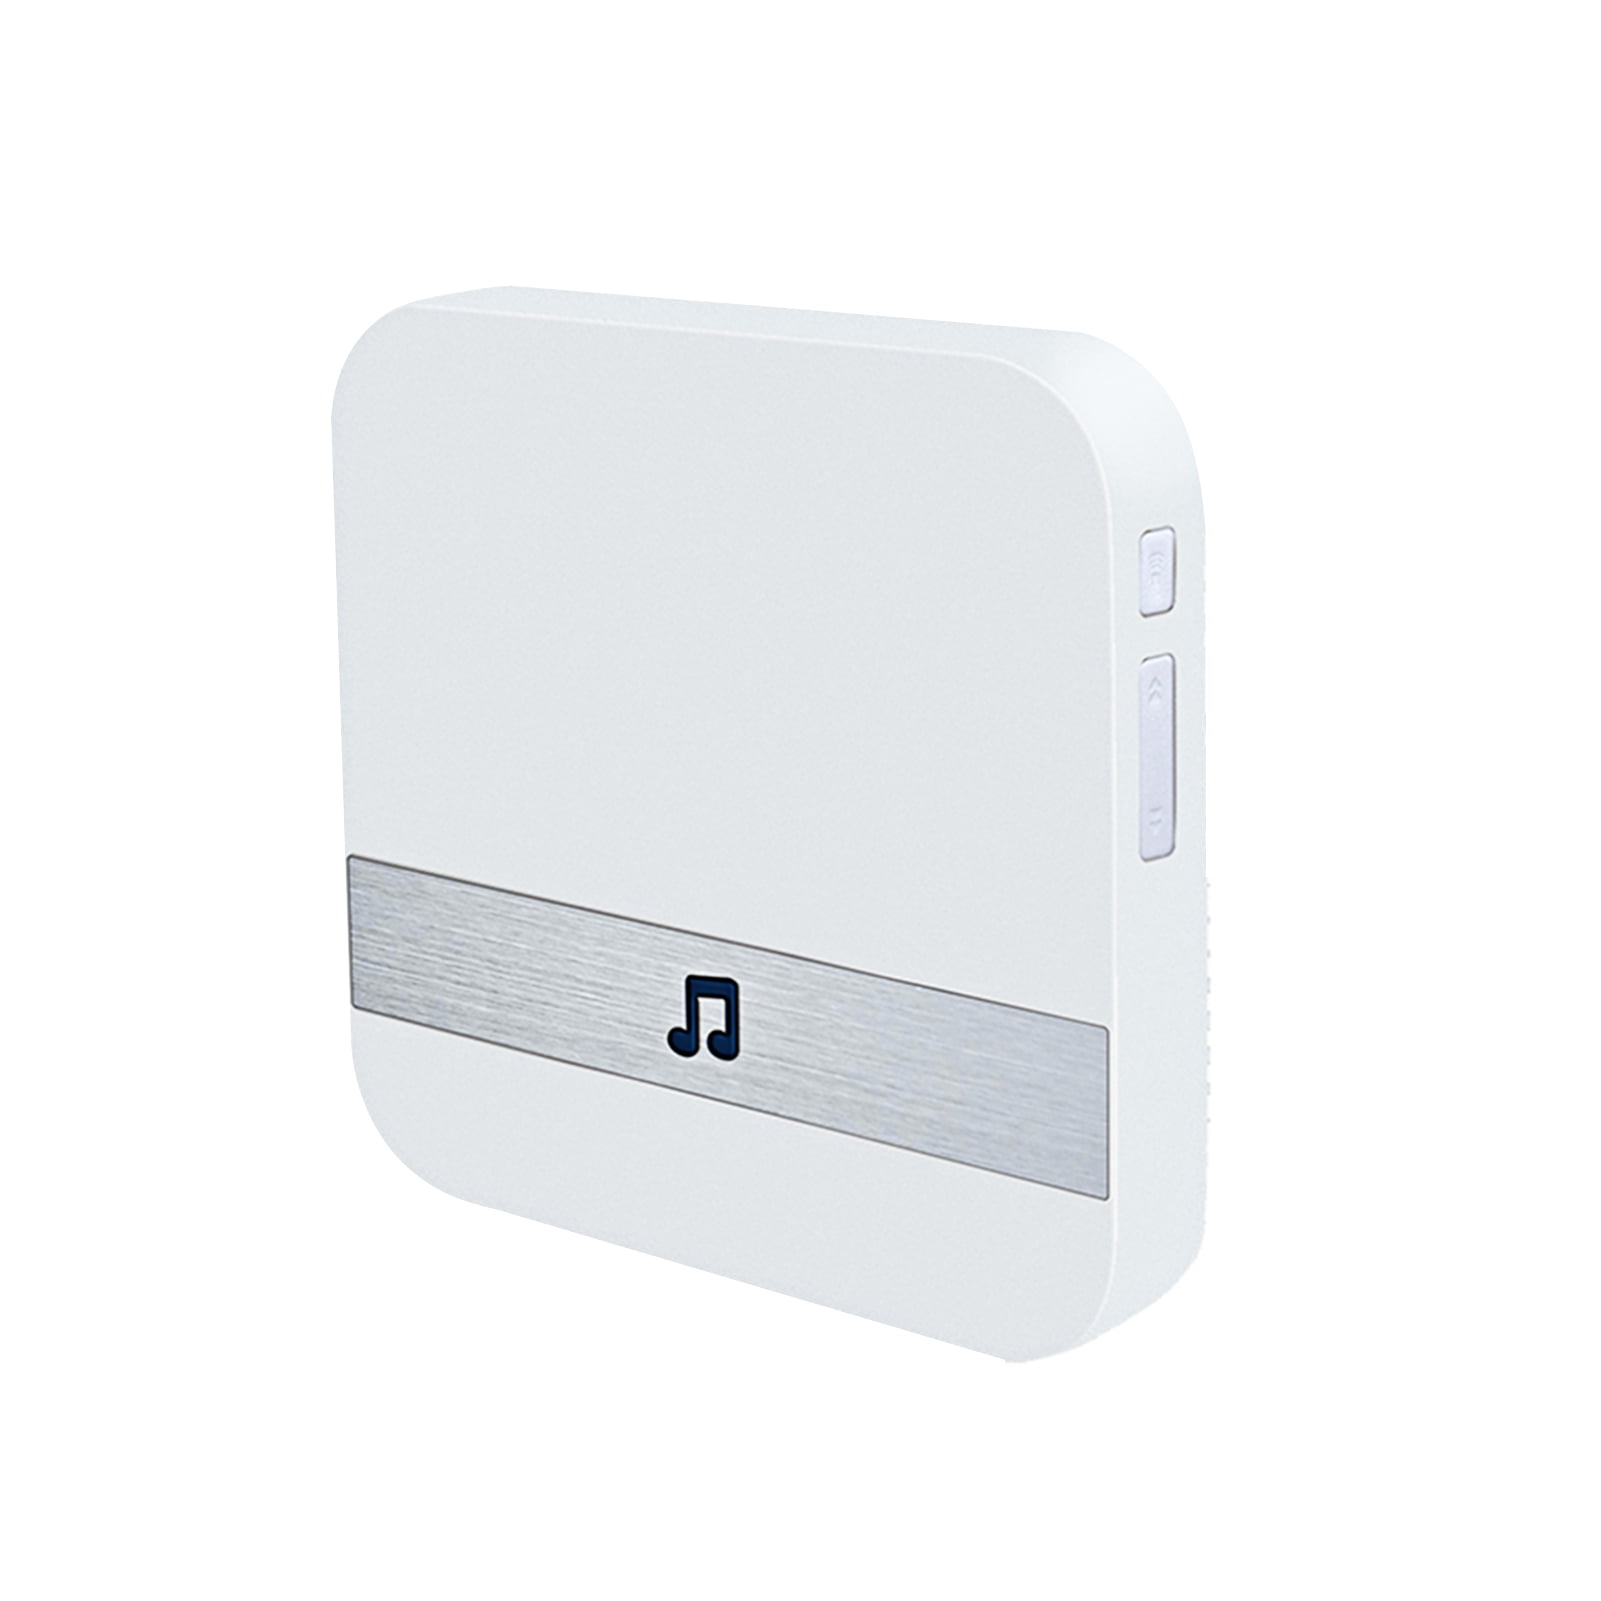 Details about   400m Waterproof Wireless Door Bell Home Doorbell Chime Plug-in Receiver 48 Music 